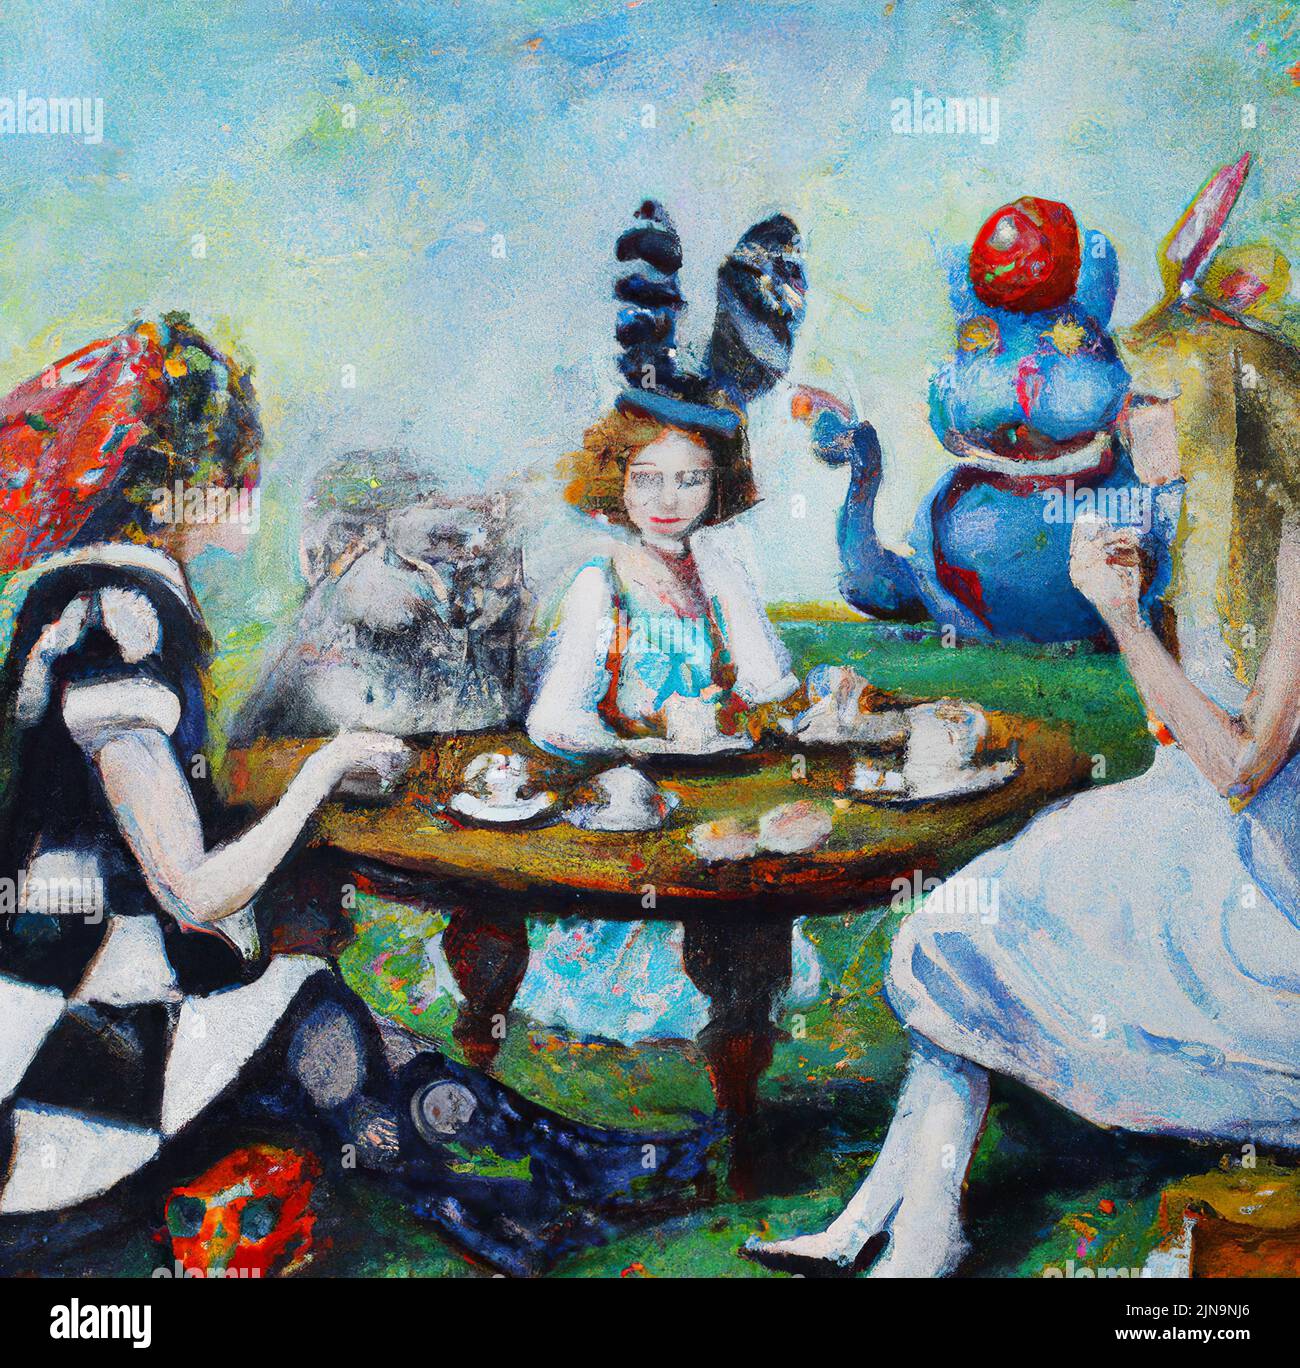 Alice in wonderland tea party blue tea Stock Photo - Alamy